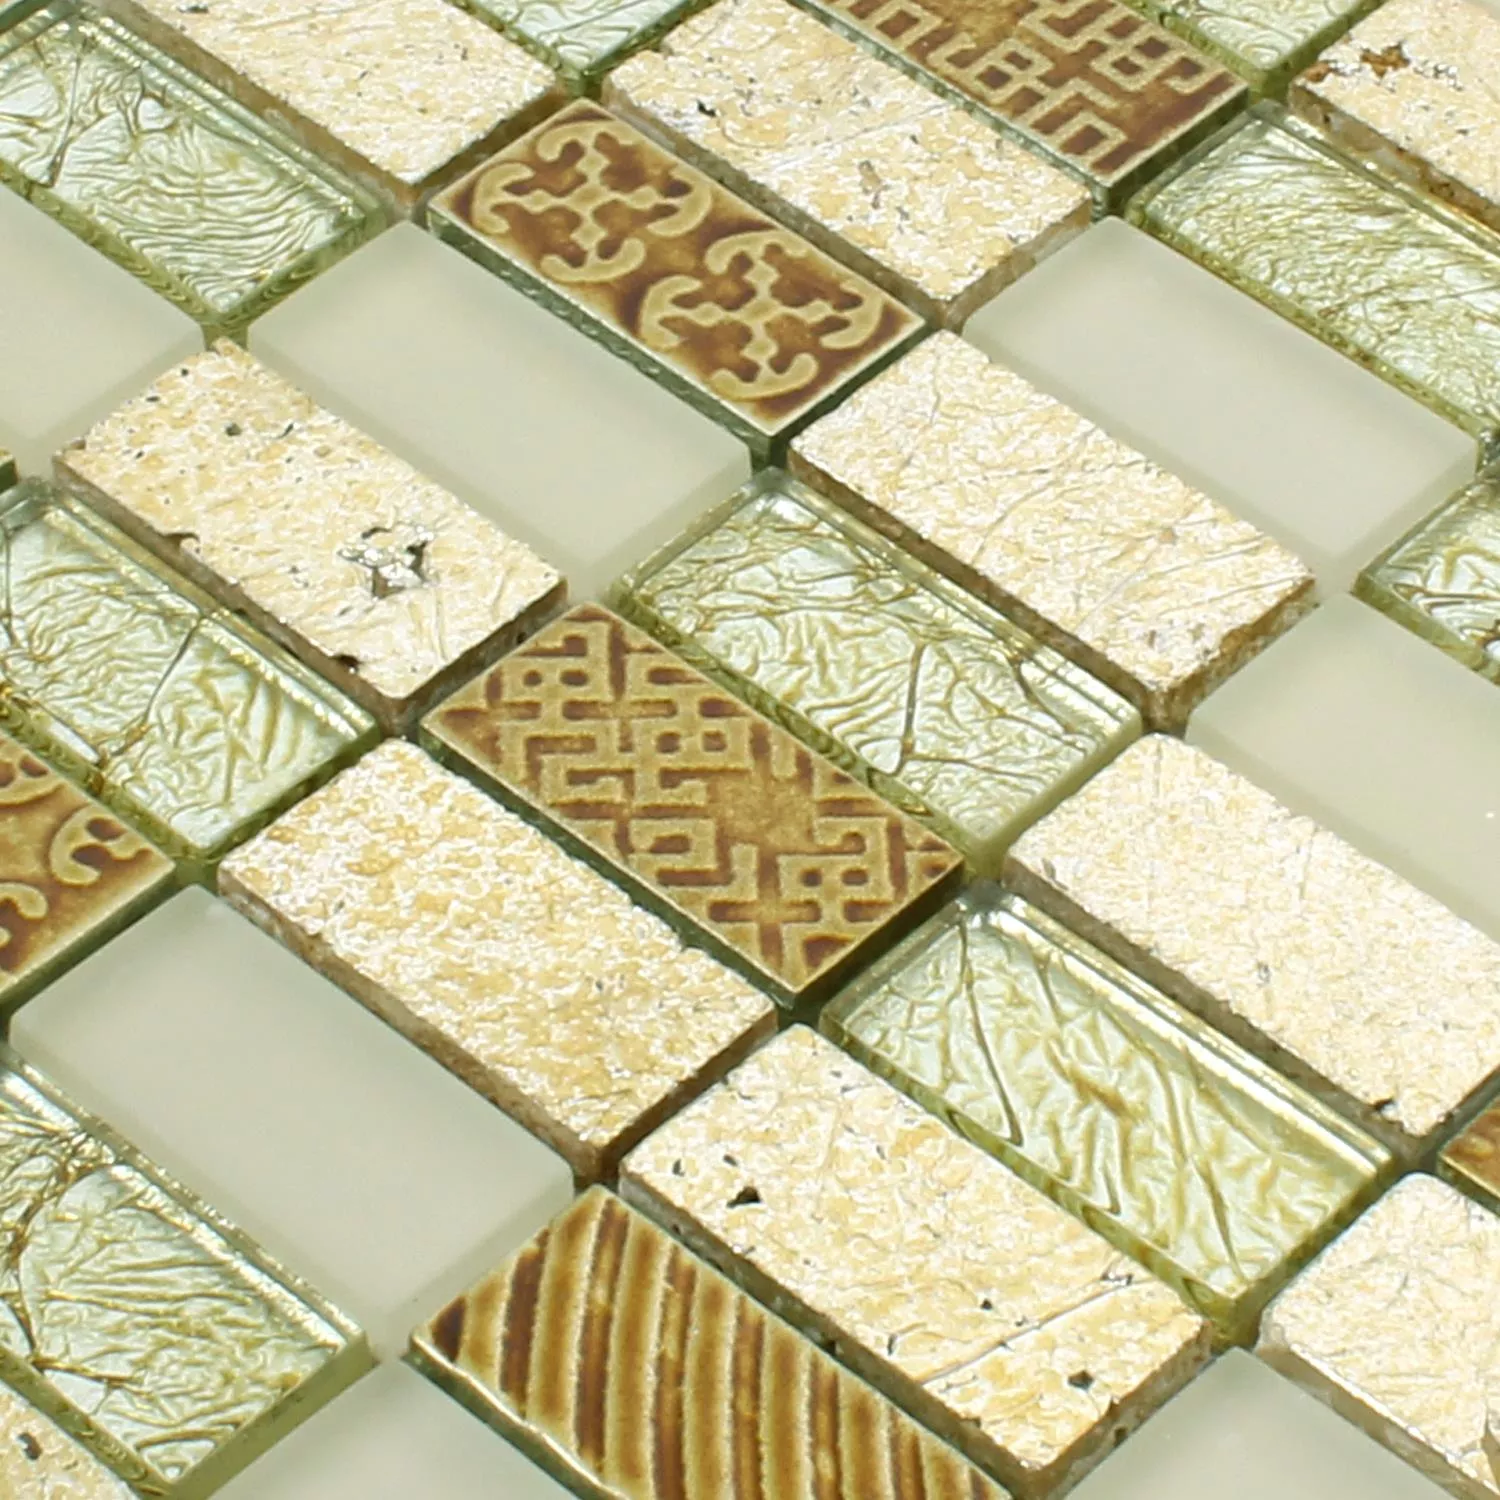 Sample Mosaic Tiles Glass Natural Stone Piroshka Gold